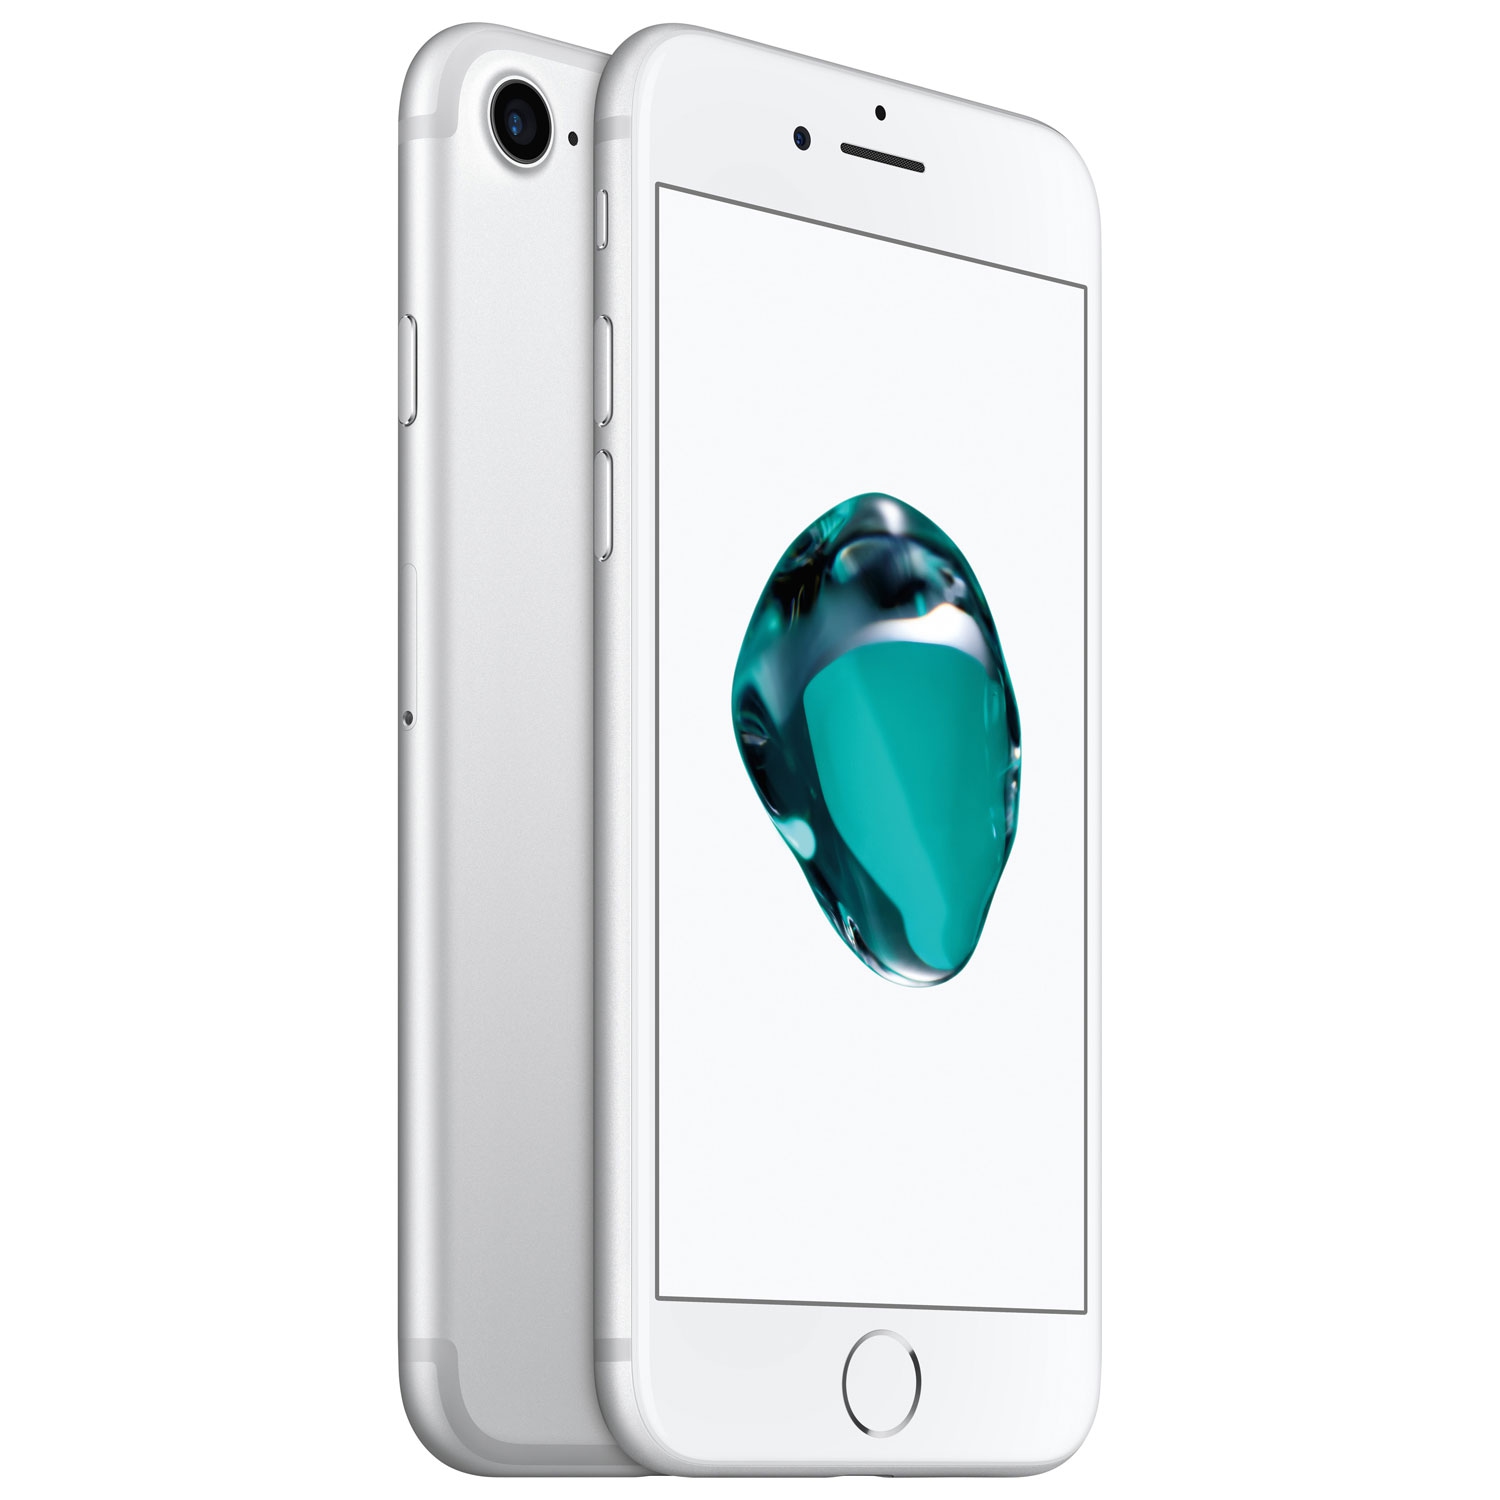 Apple iPhone 7 32GB Smartphone - Silver - Unlocked - Open Box